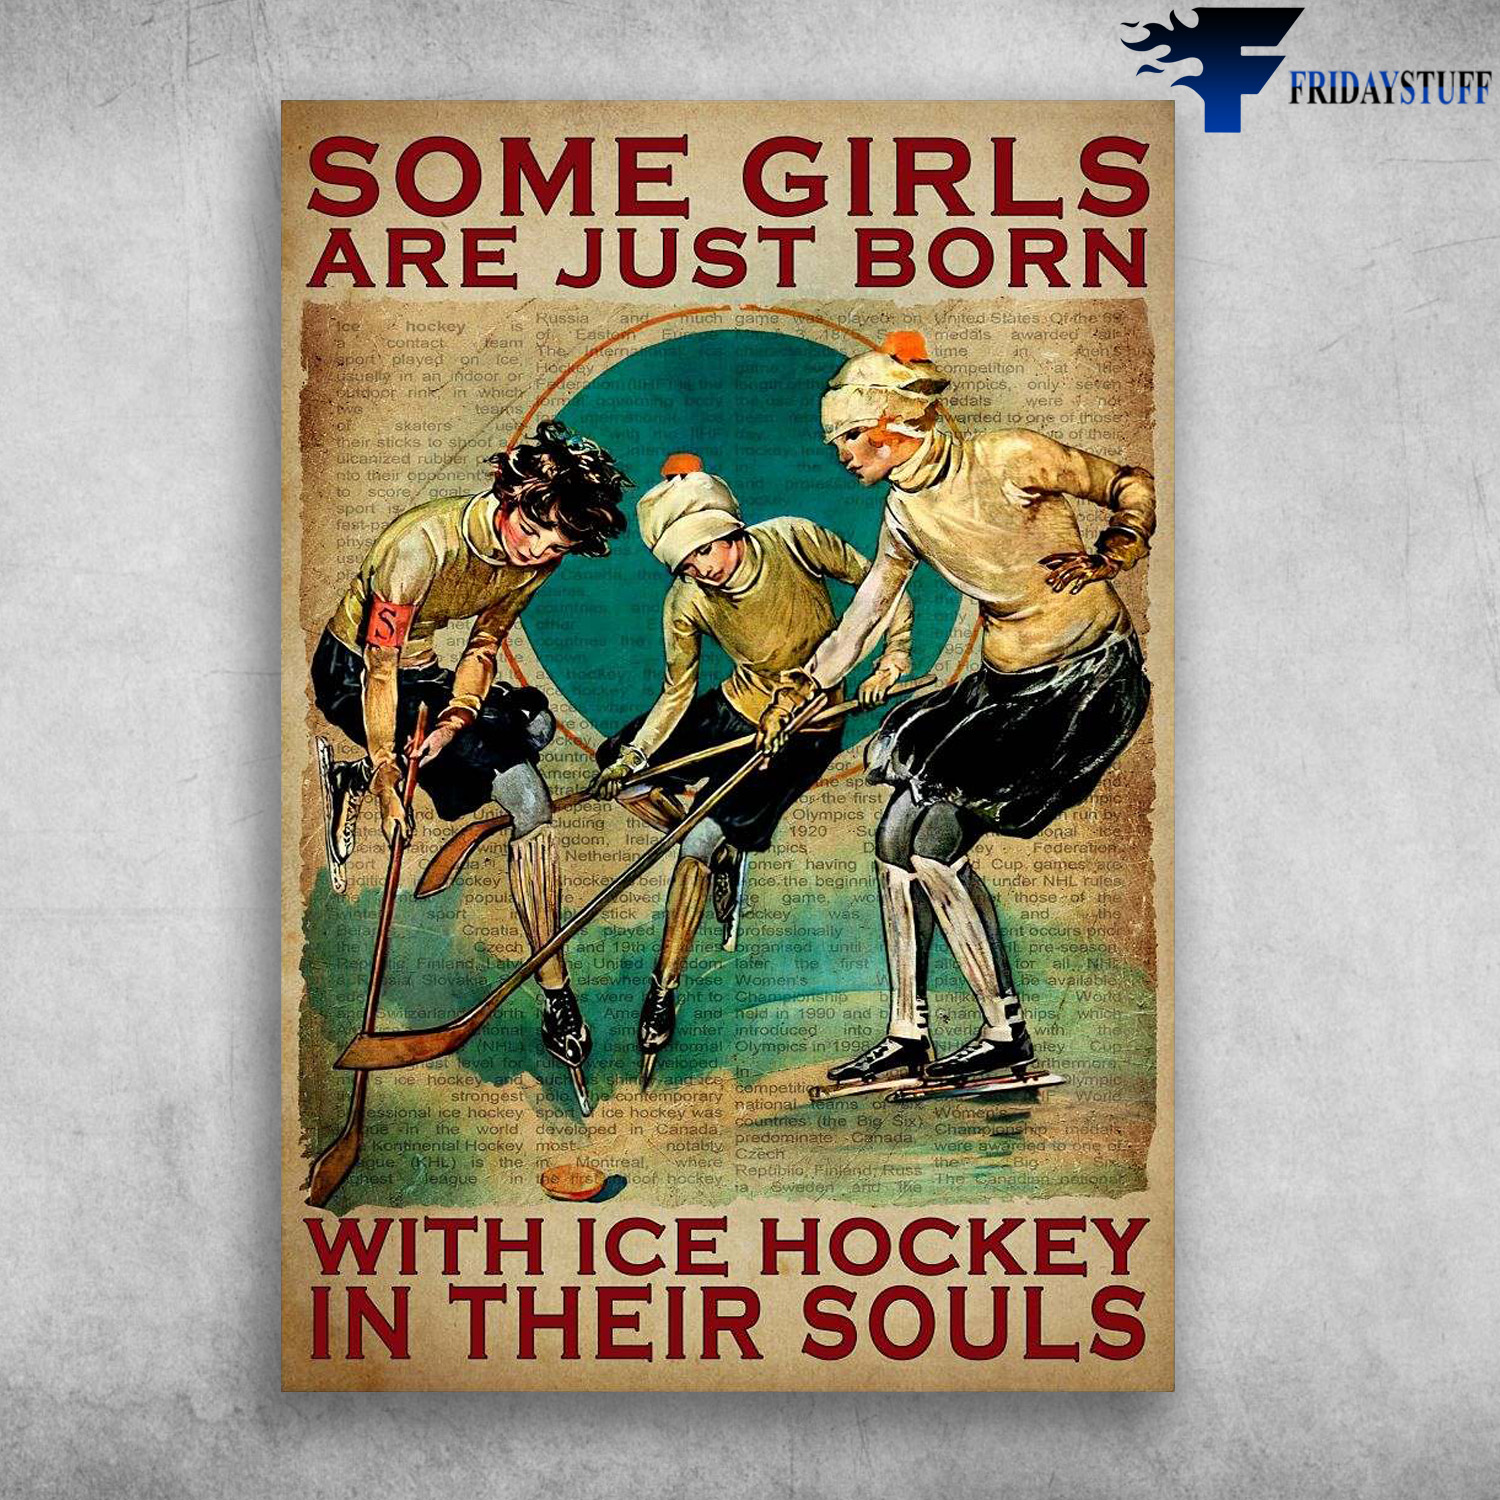 Hockey Player, Hockey Girl - Somegirls Are Just Born, With Ice Hockey In Their Souls, Ice Hockey